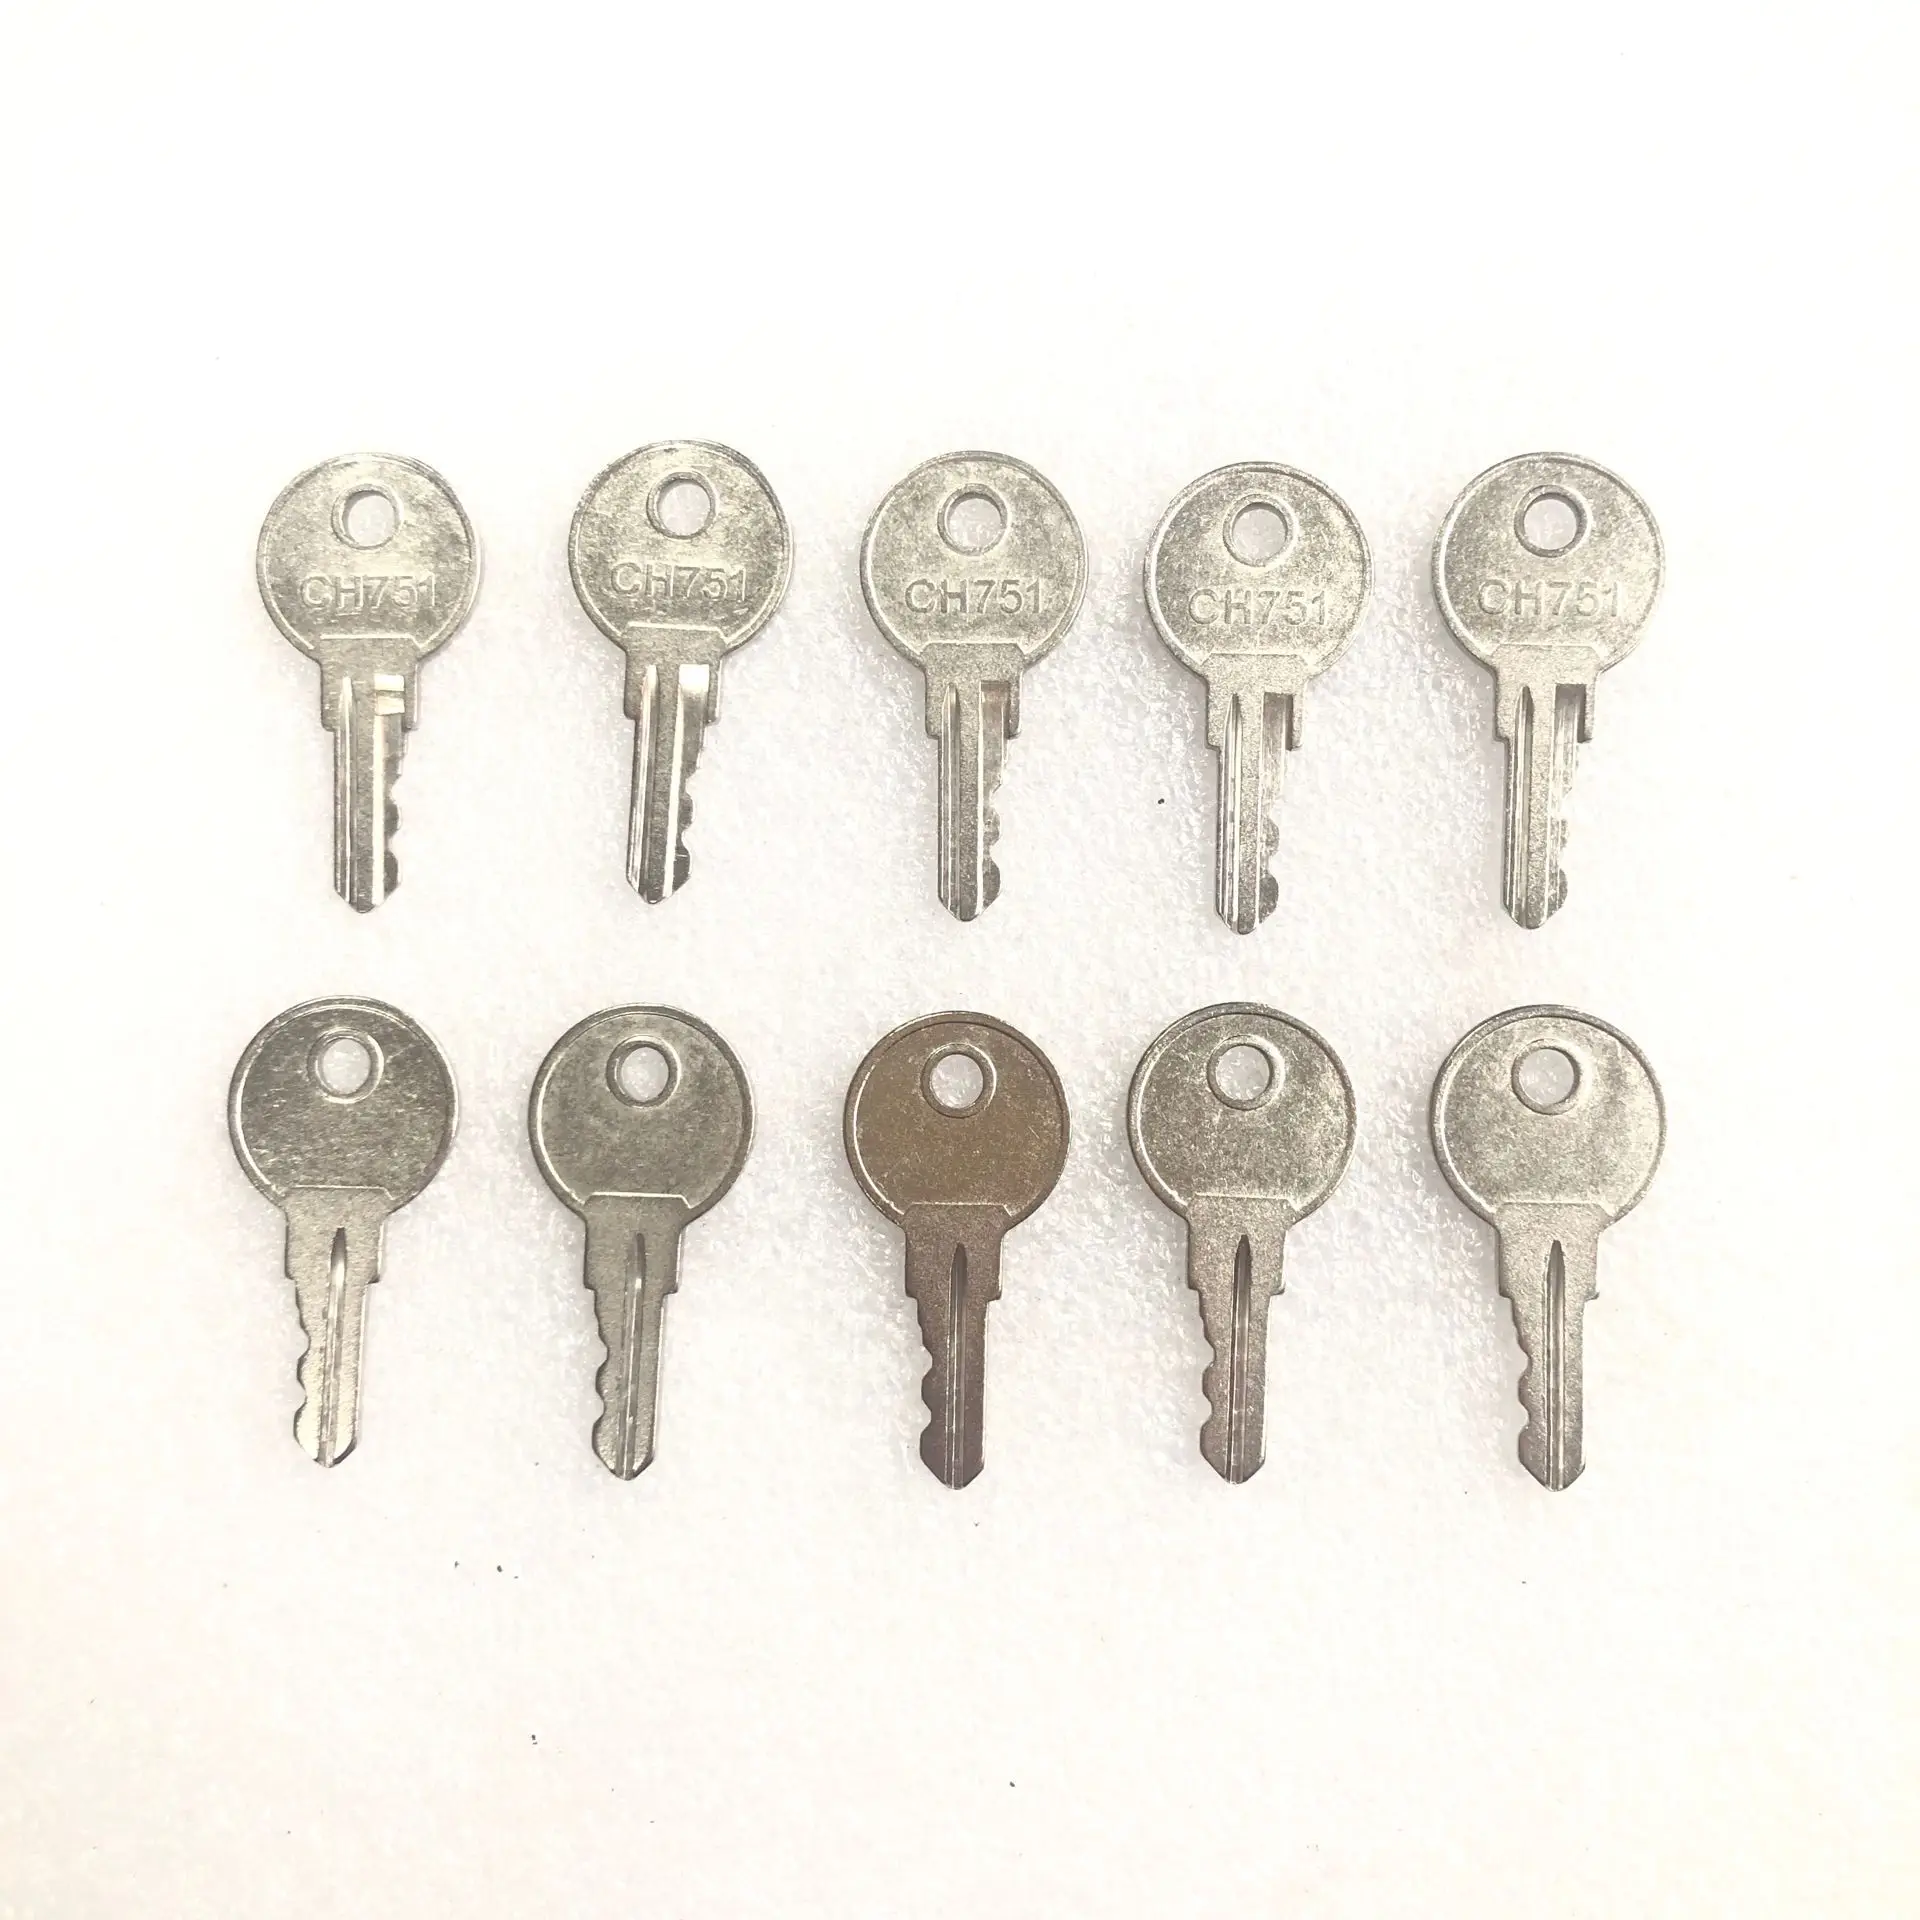 

10PCS CH751 RV Keys, Hurd Keys, CH751 RV Camper Trailer Key, CH-751